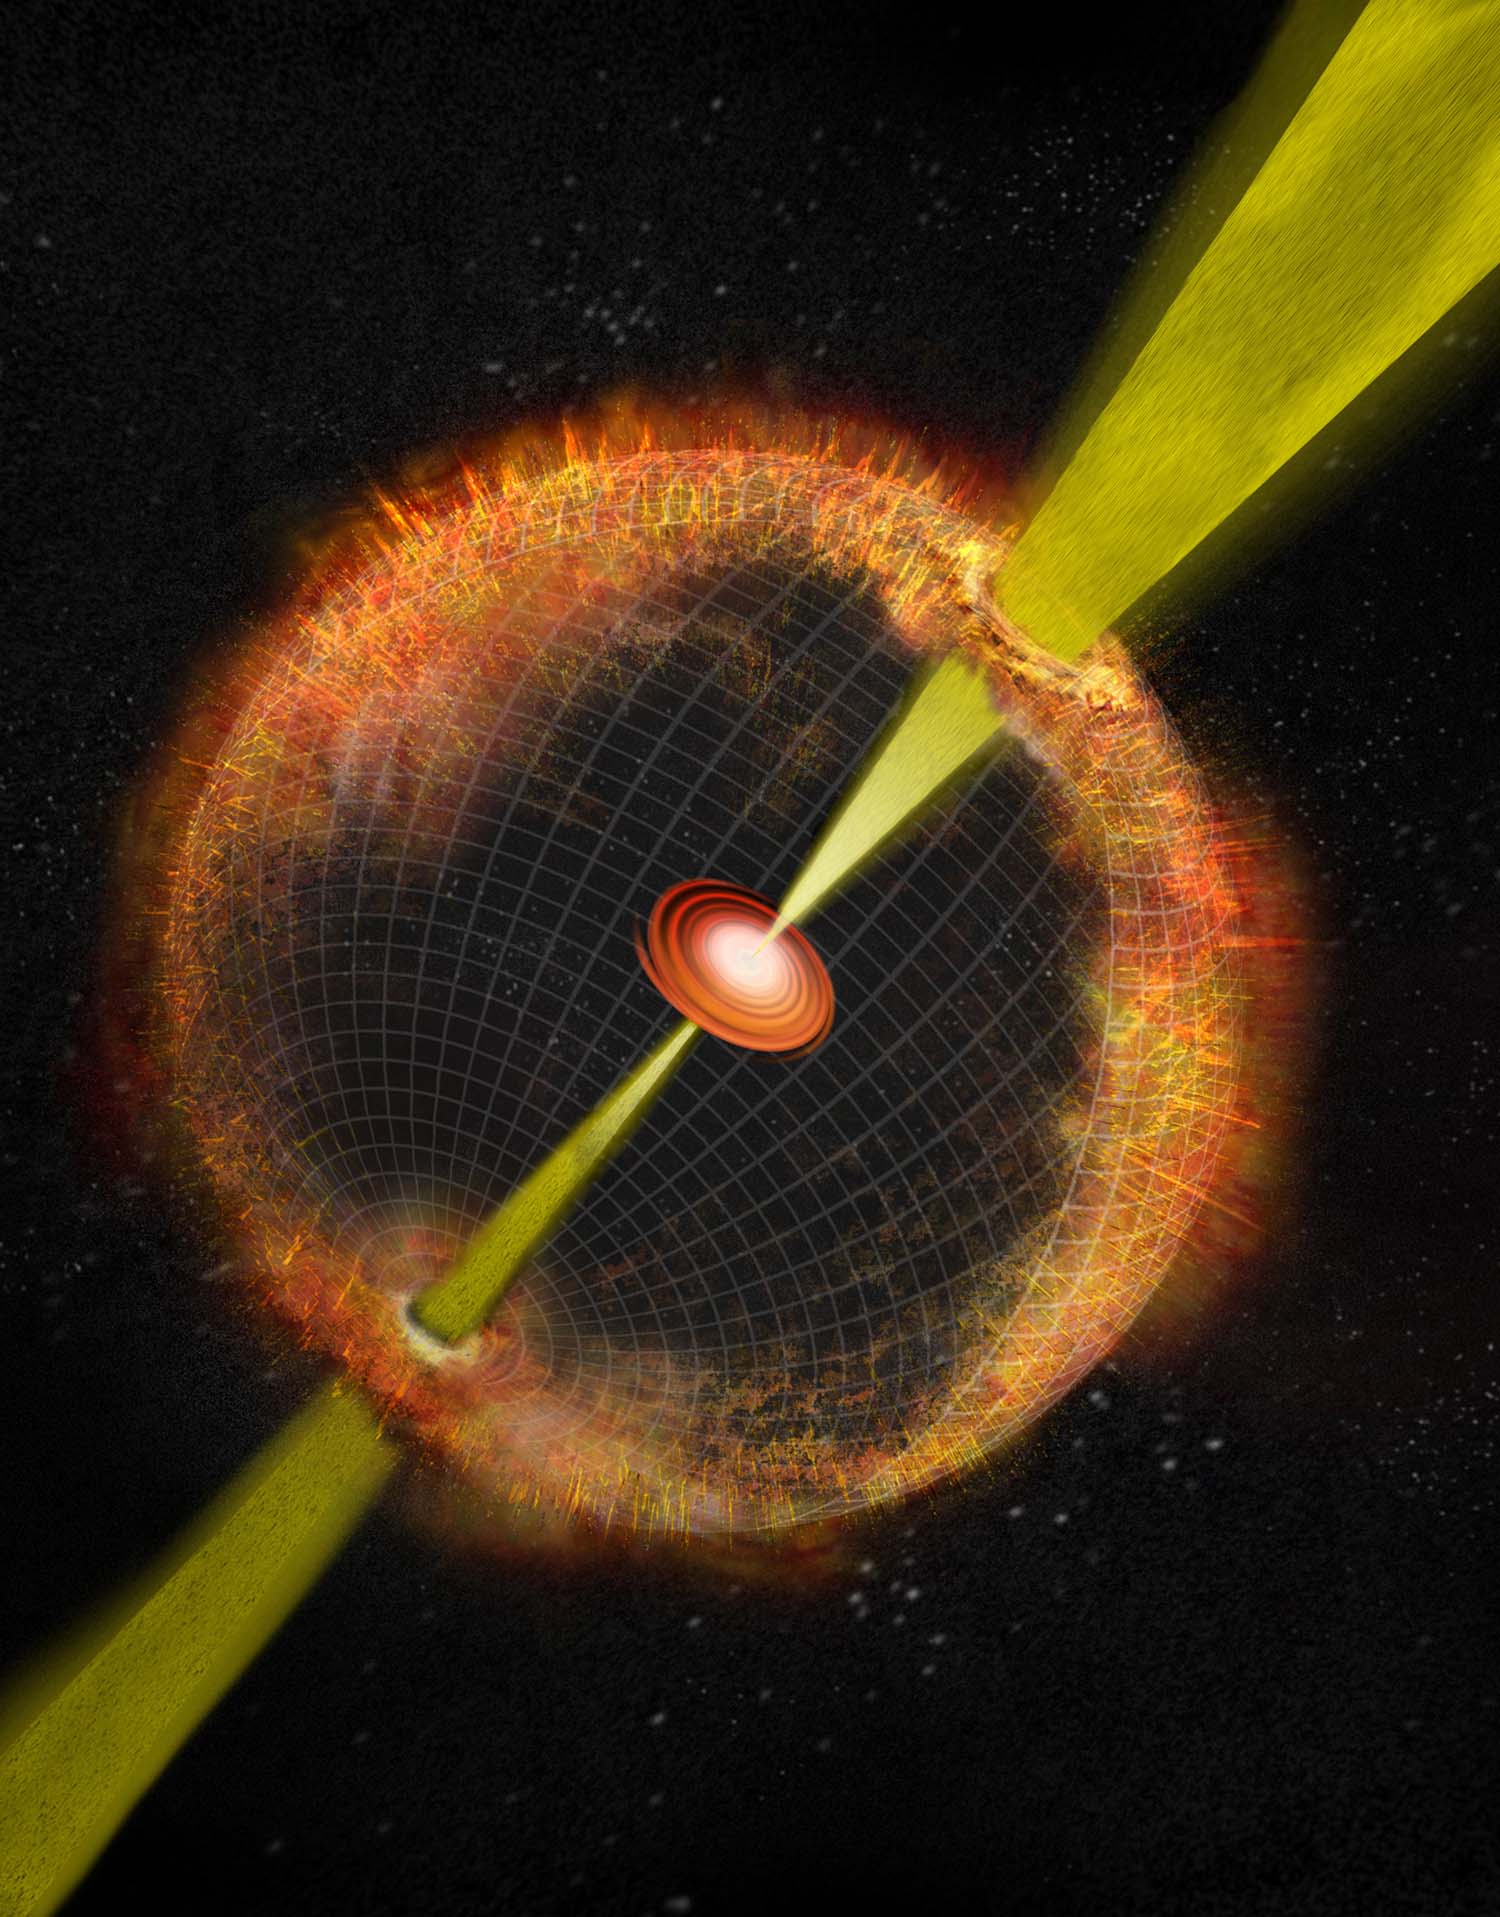 https://insider.si.edu/wp-content/uploads/2010/01/engine-driven-supernova-explosion-with-accretion-disk.jpg